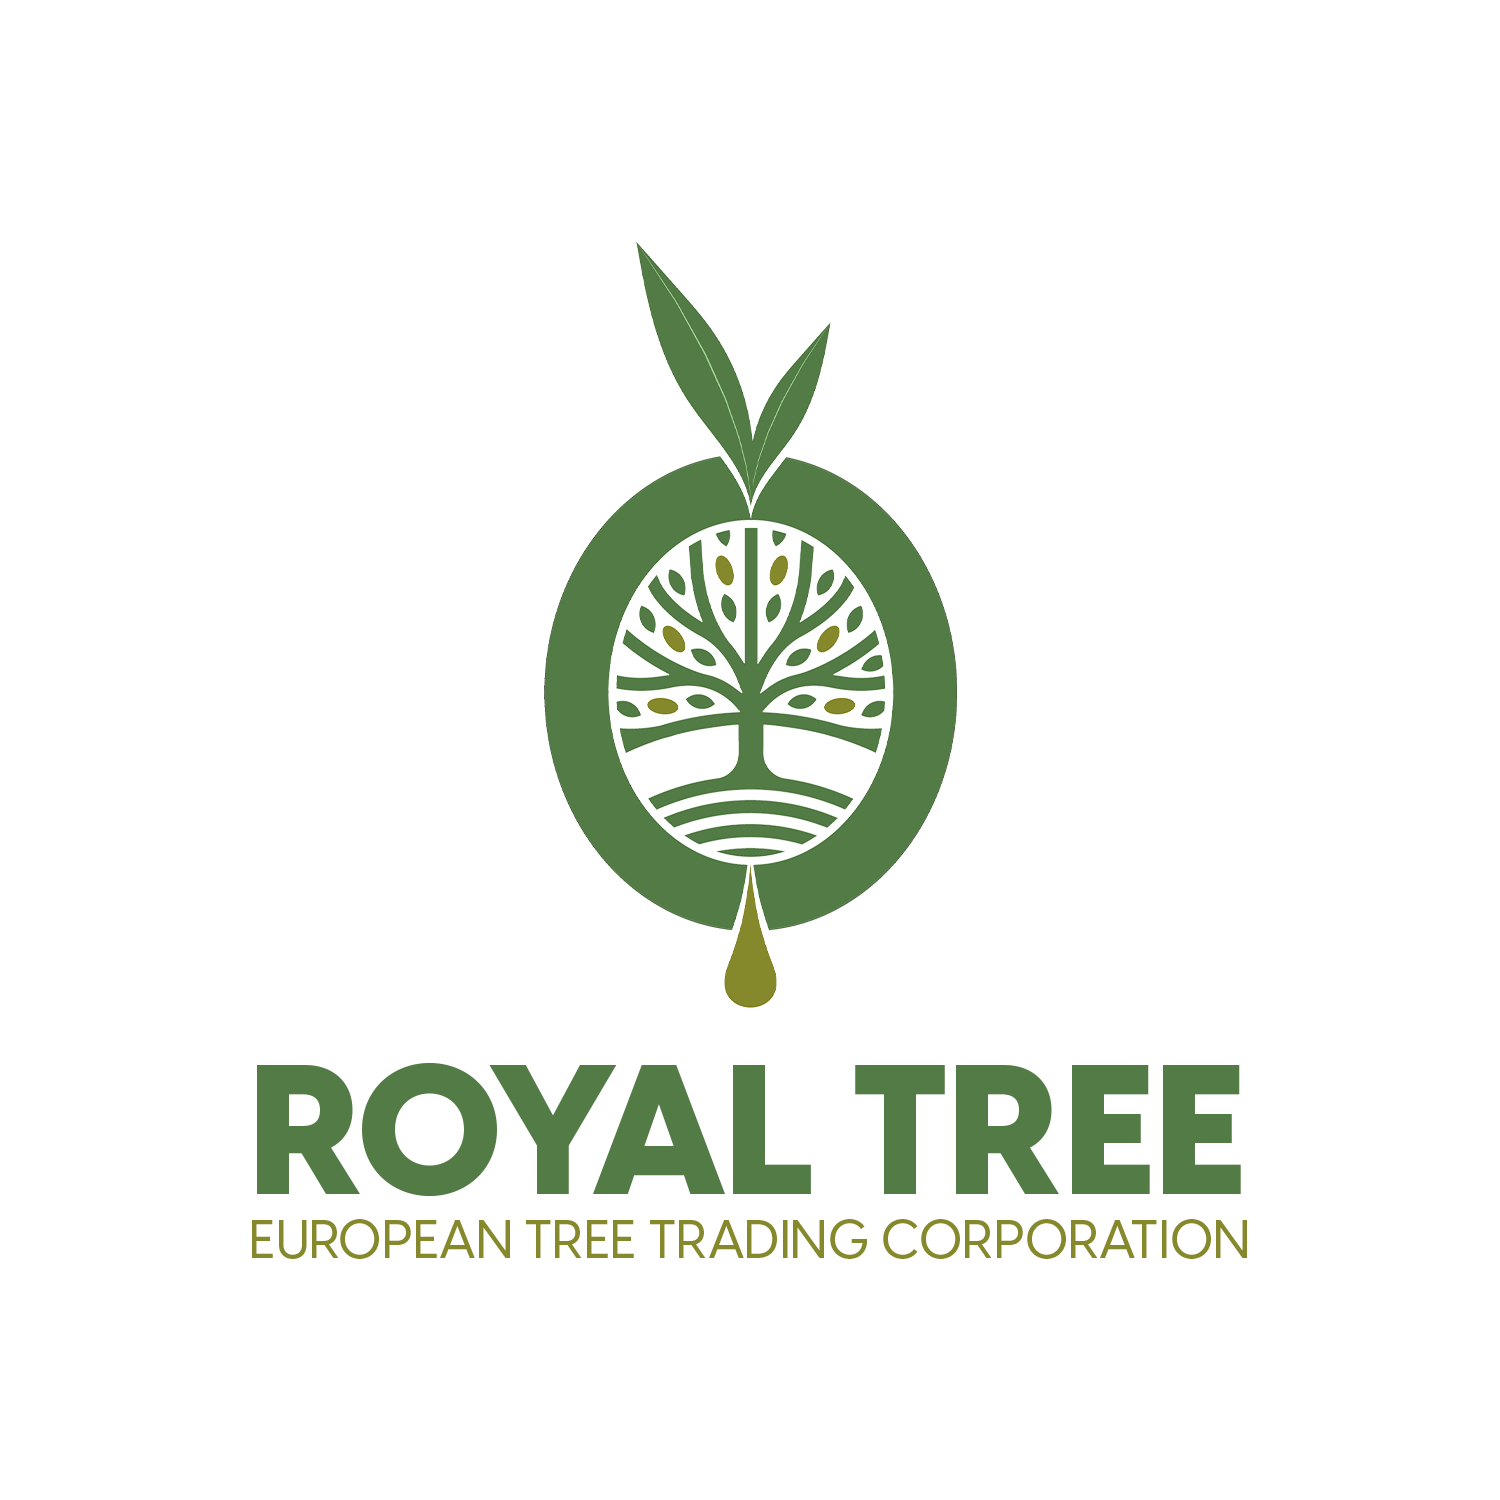 The Royal Tree Corporation